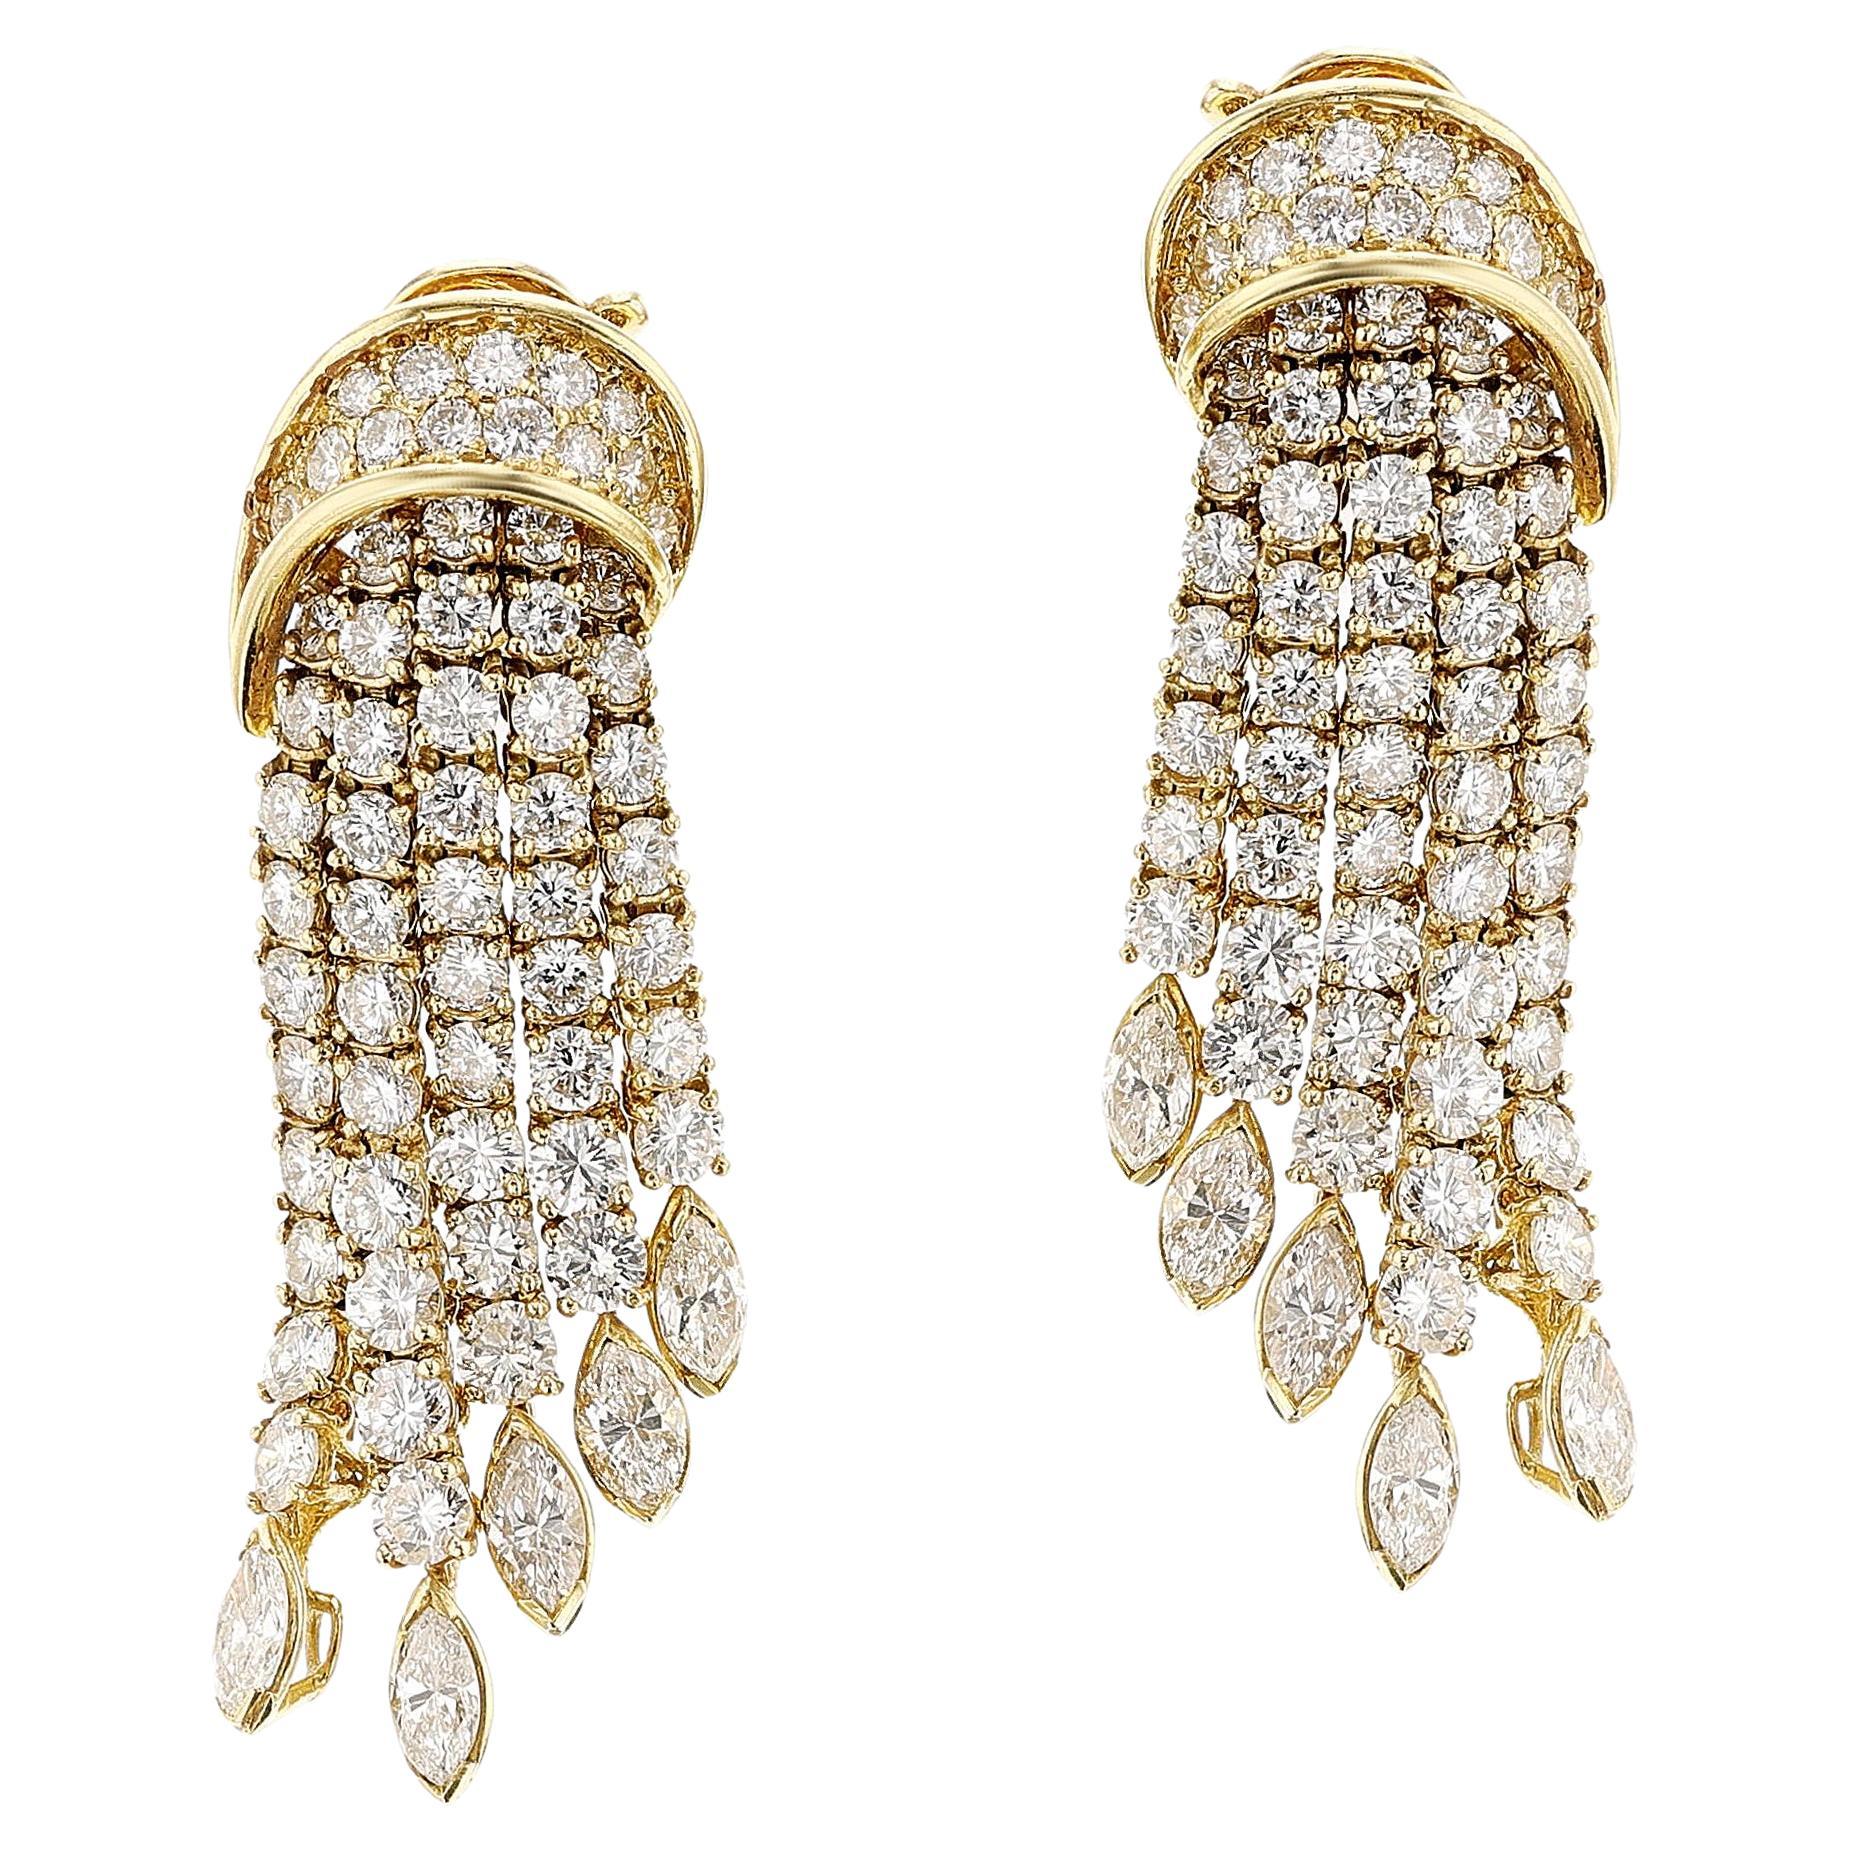 Fred Paris Diamond Dangling Earrings, 18k 